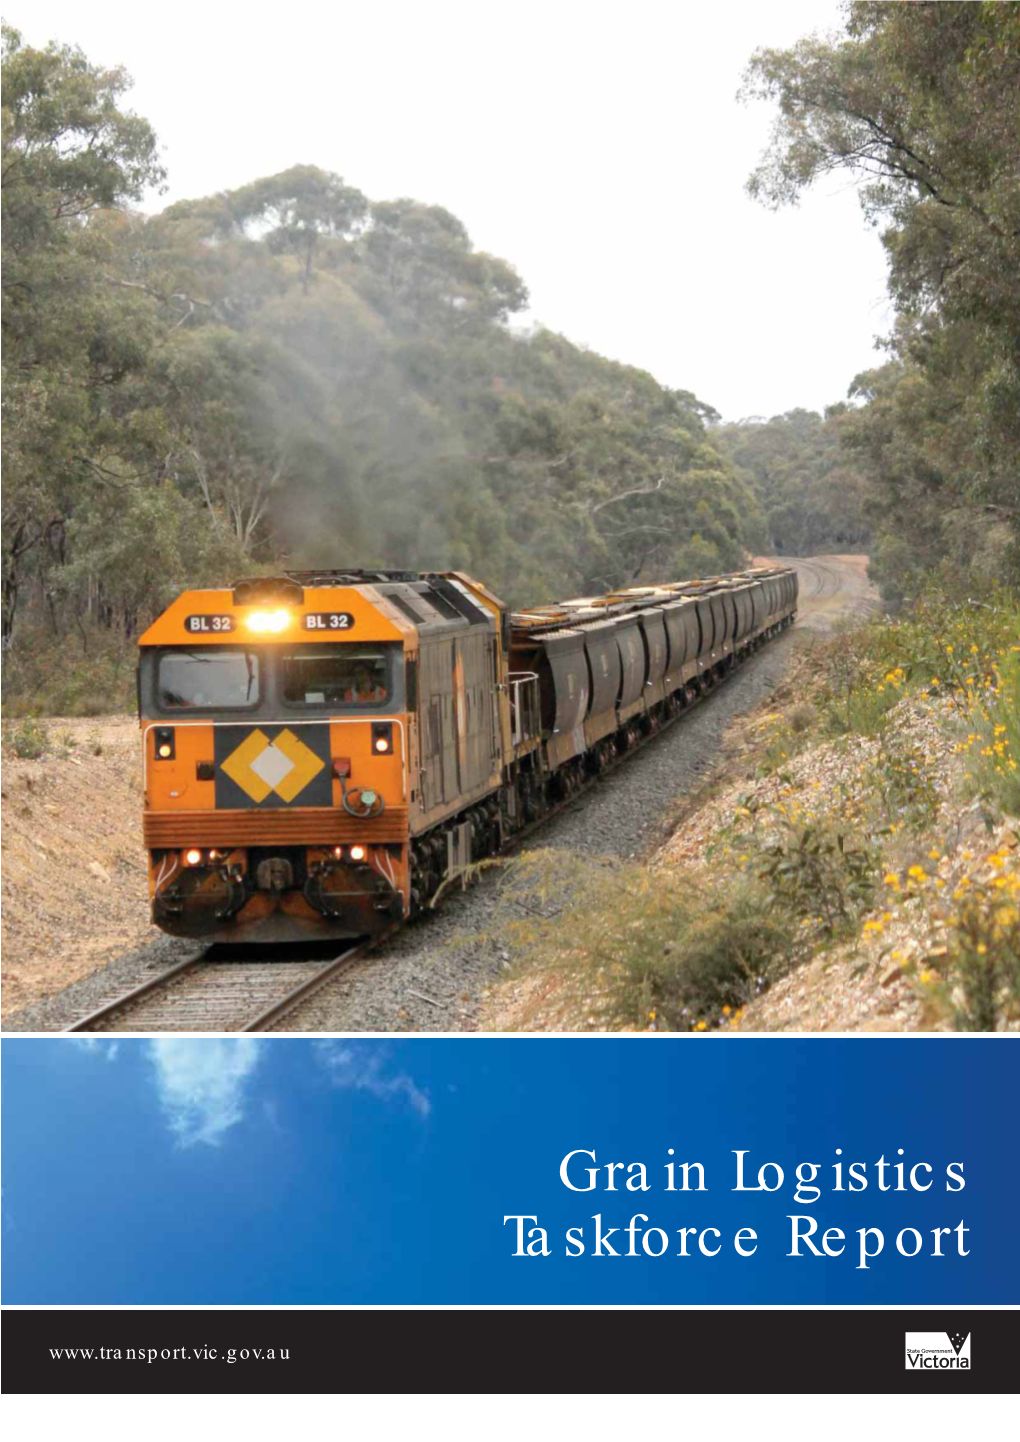 Grain Logistics Taskforce Report